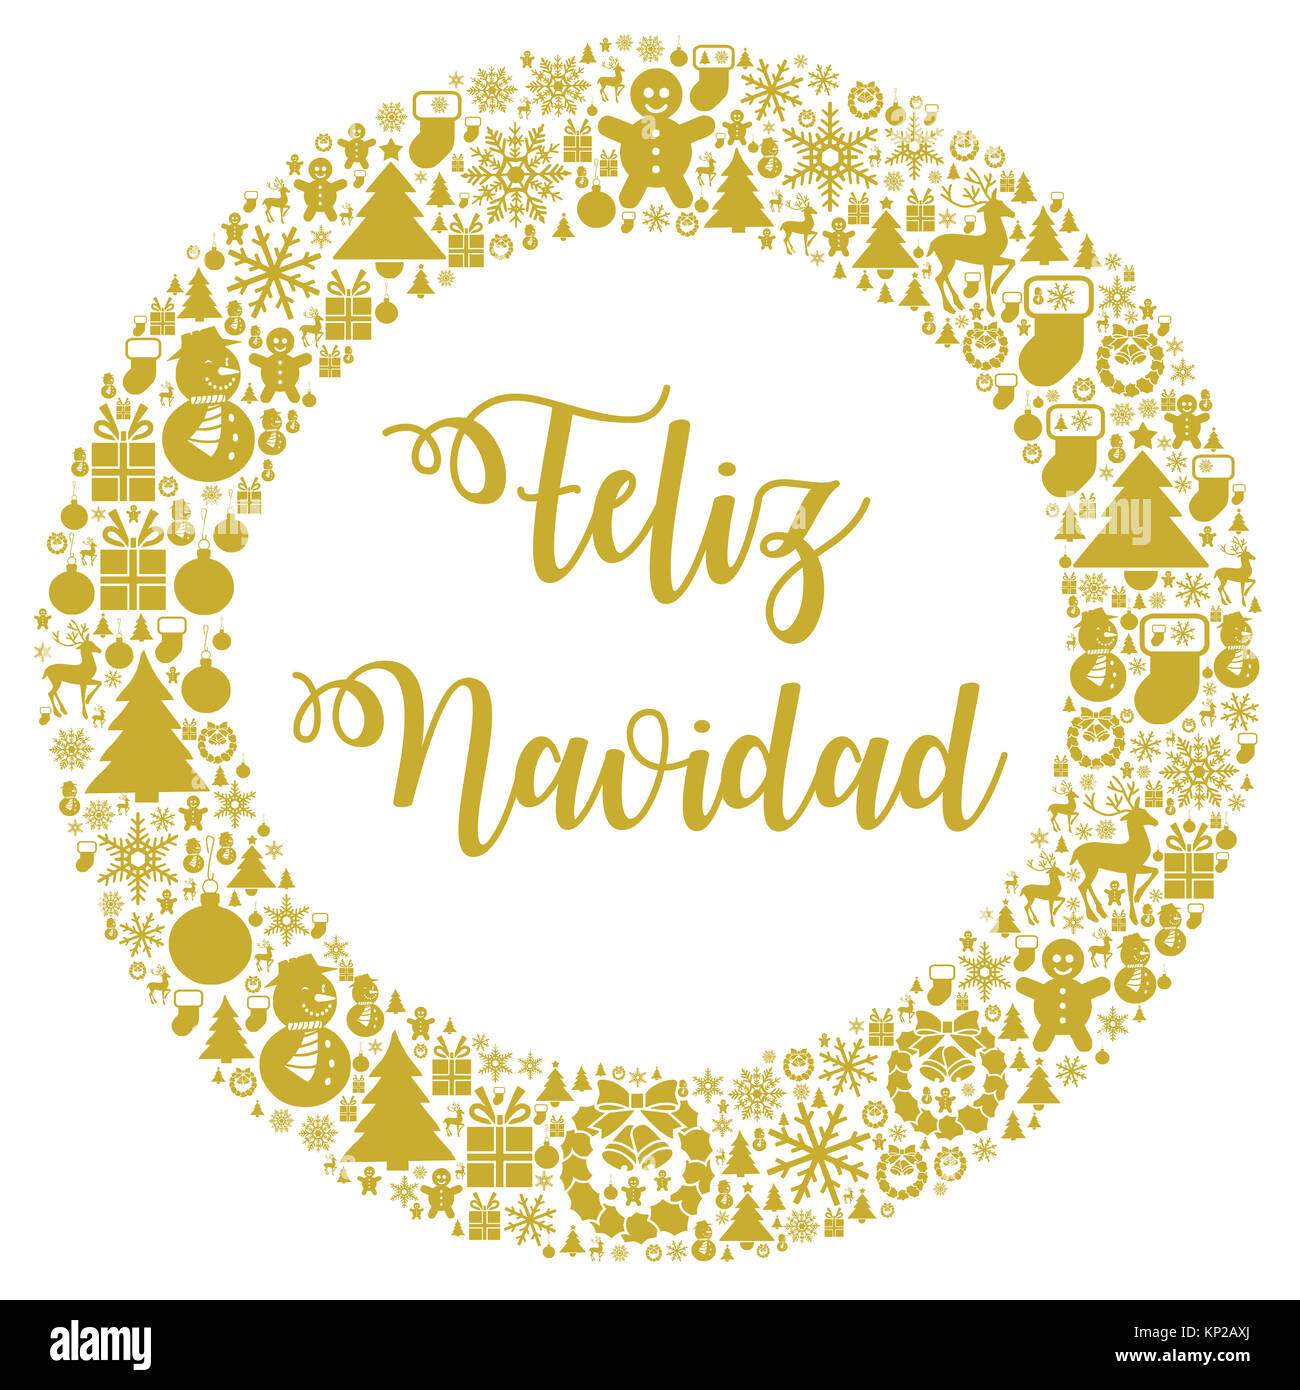 Merry Christmas illustration in Spanish Stock Photo